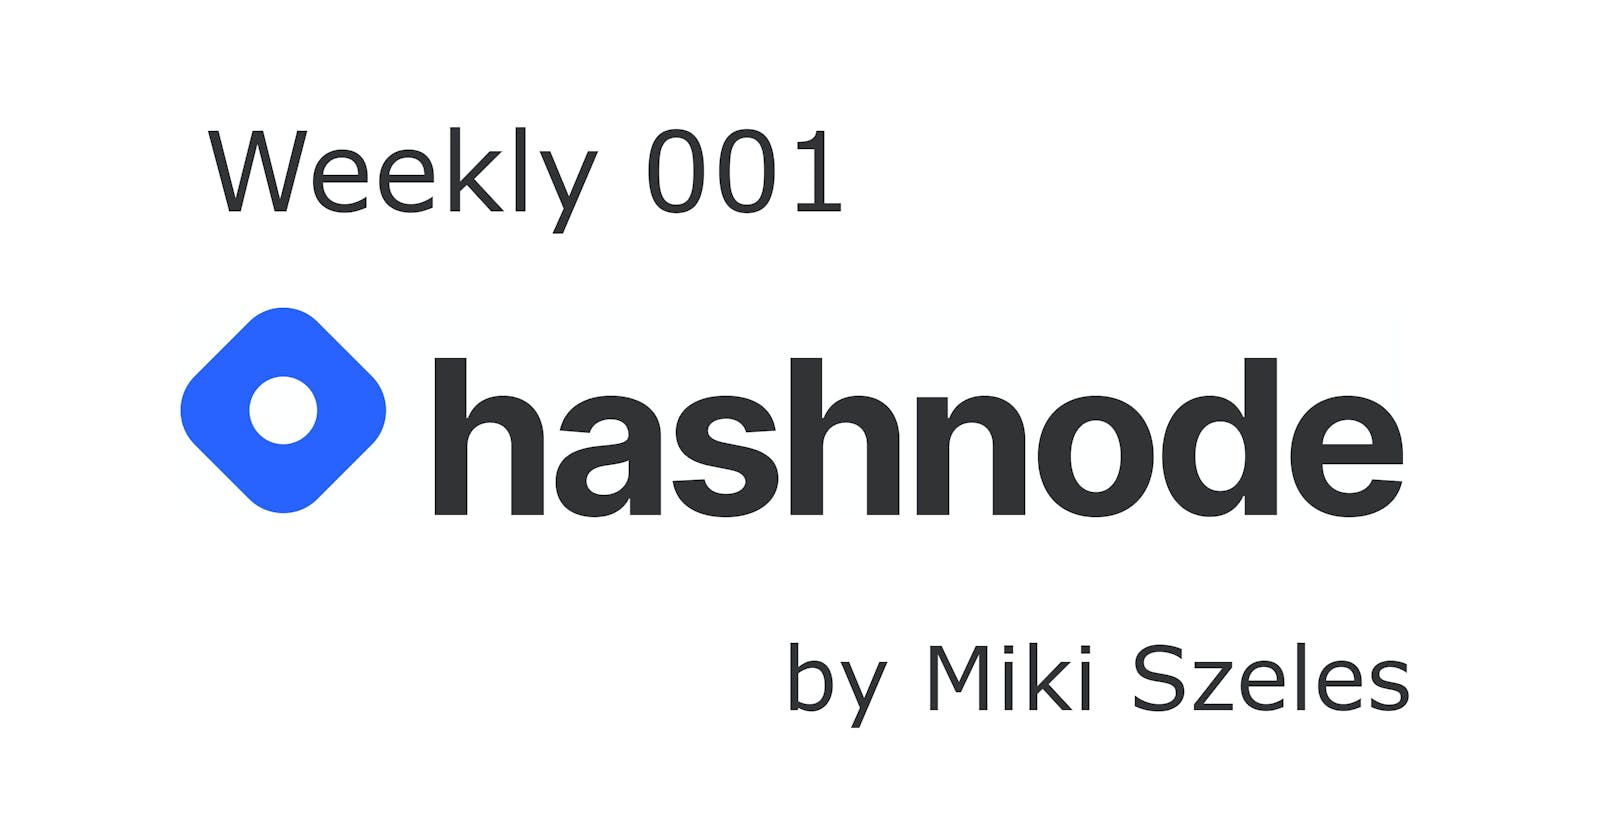 Hashnode Weekly 001 by Miki Szeles